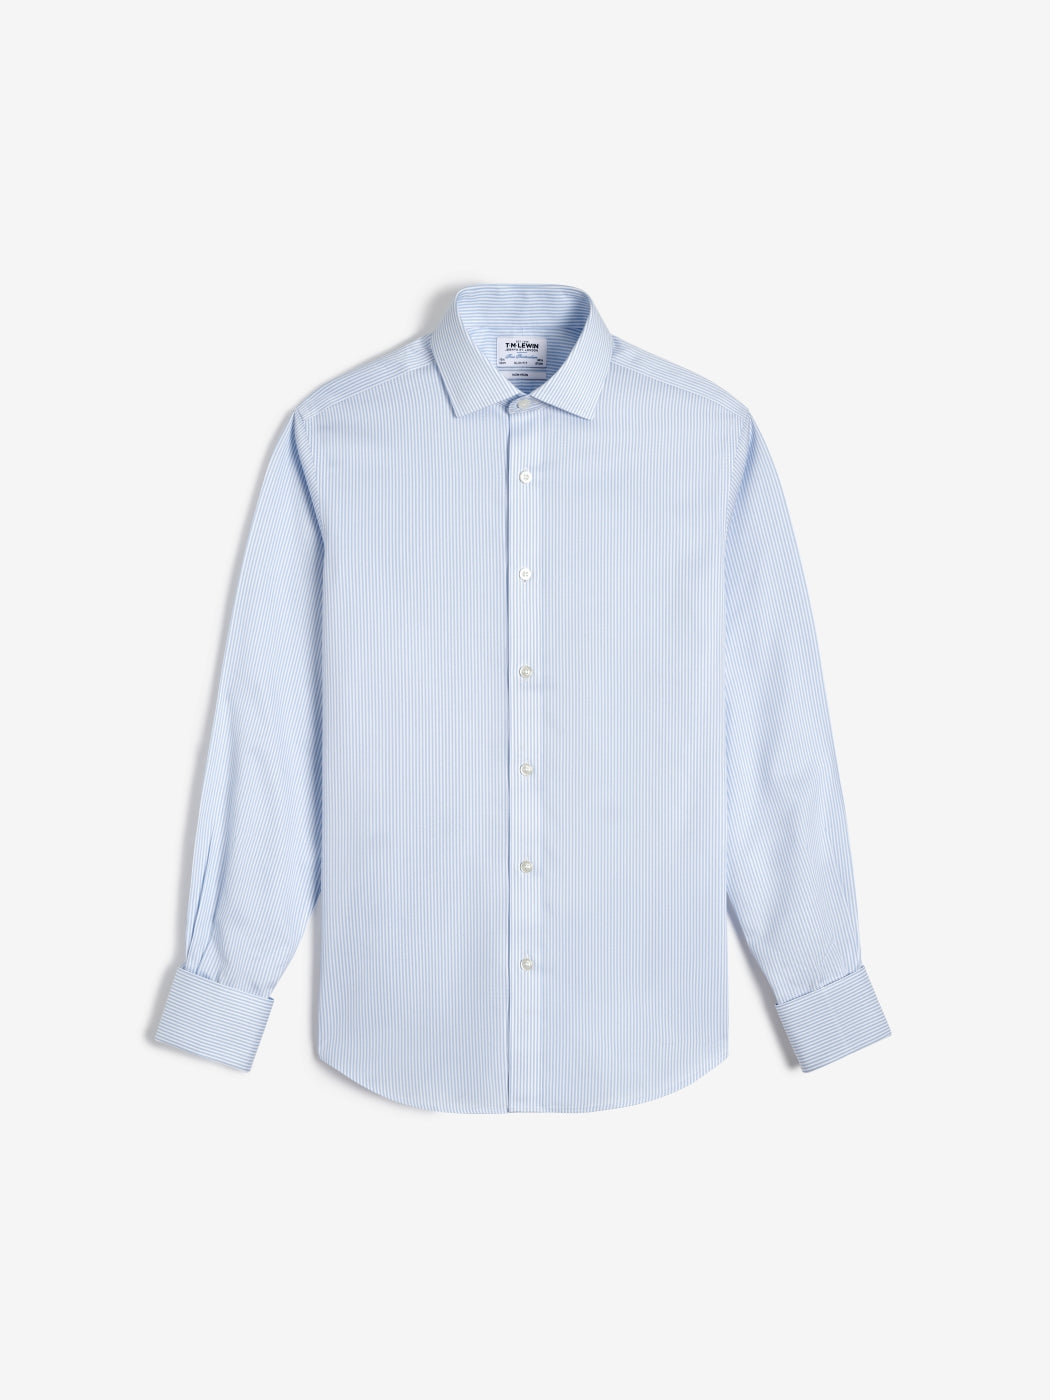 Image 2 of Non-Iron Blue Narrow Stripe Twill Regular Fit Double Cuff Classic Collar Shirt